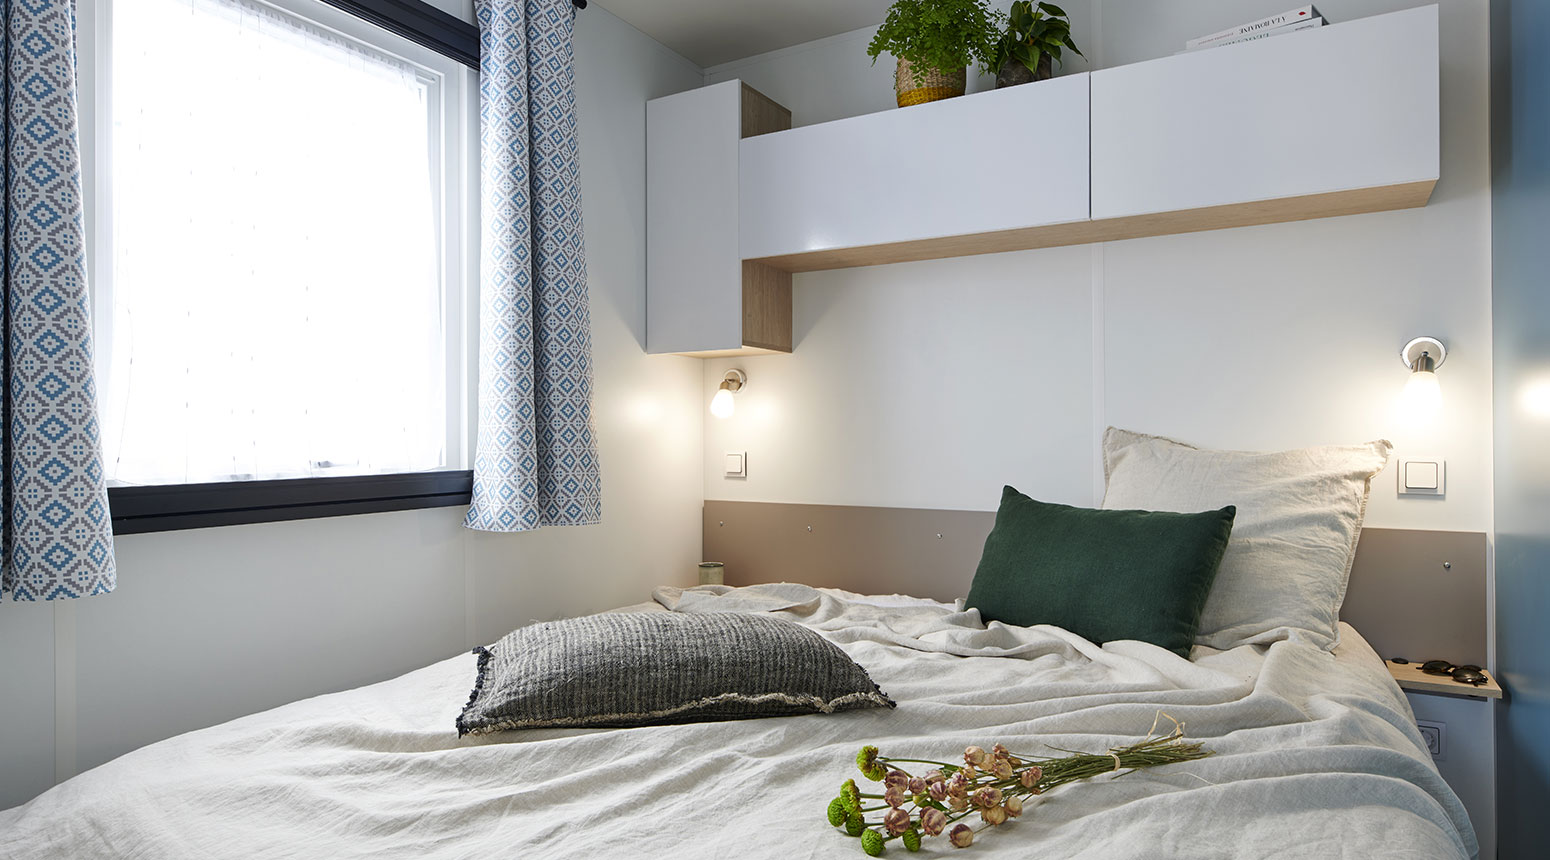 Rental - Accommodation Mobile home lodge 2 bedrooms : Campsite  Porte des Vosges A31